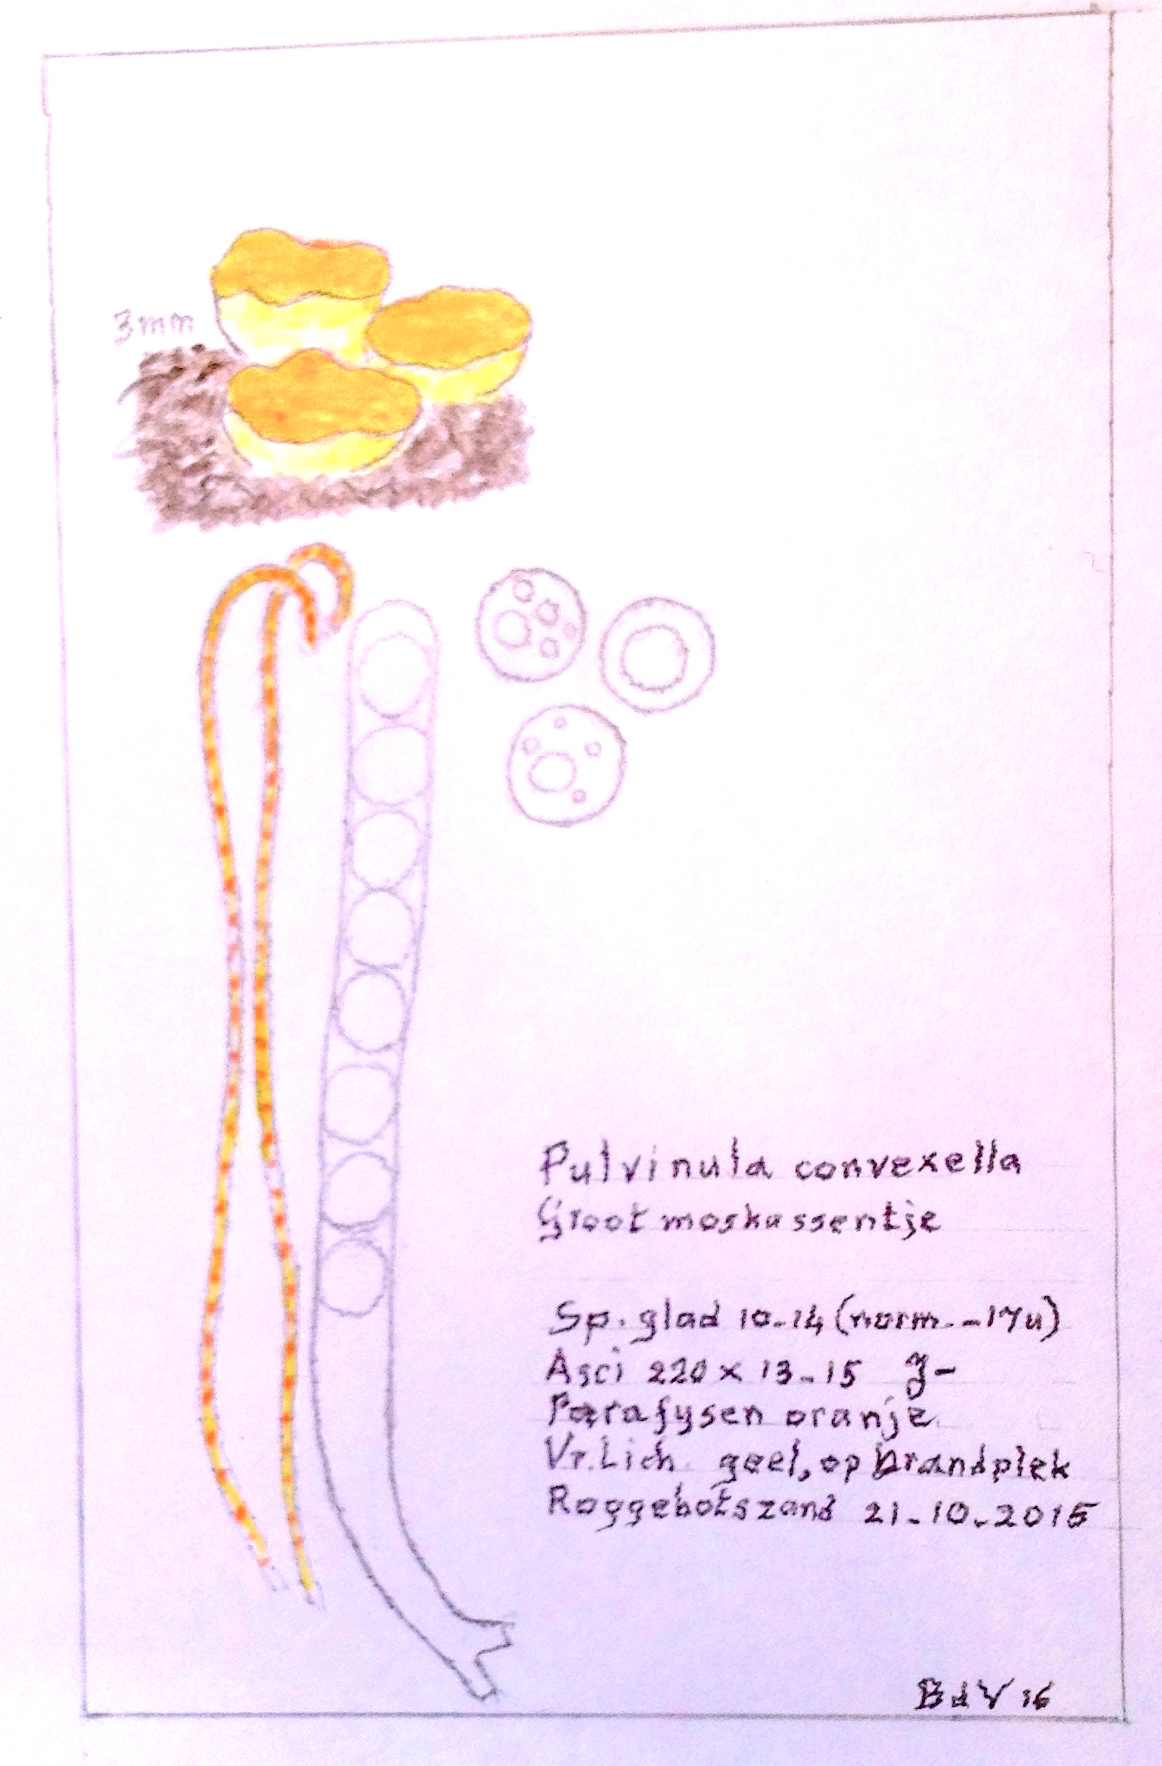 Pulvinula convexella (door Bernhard de Vries)